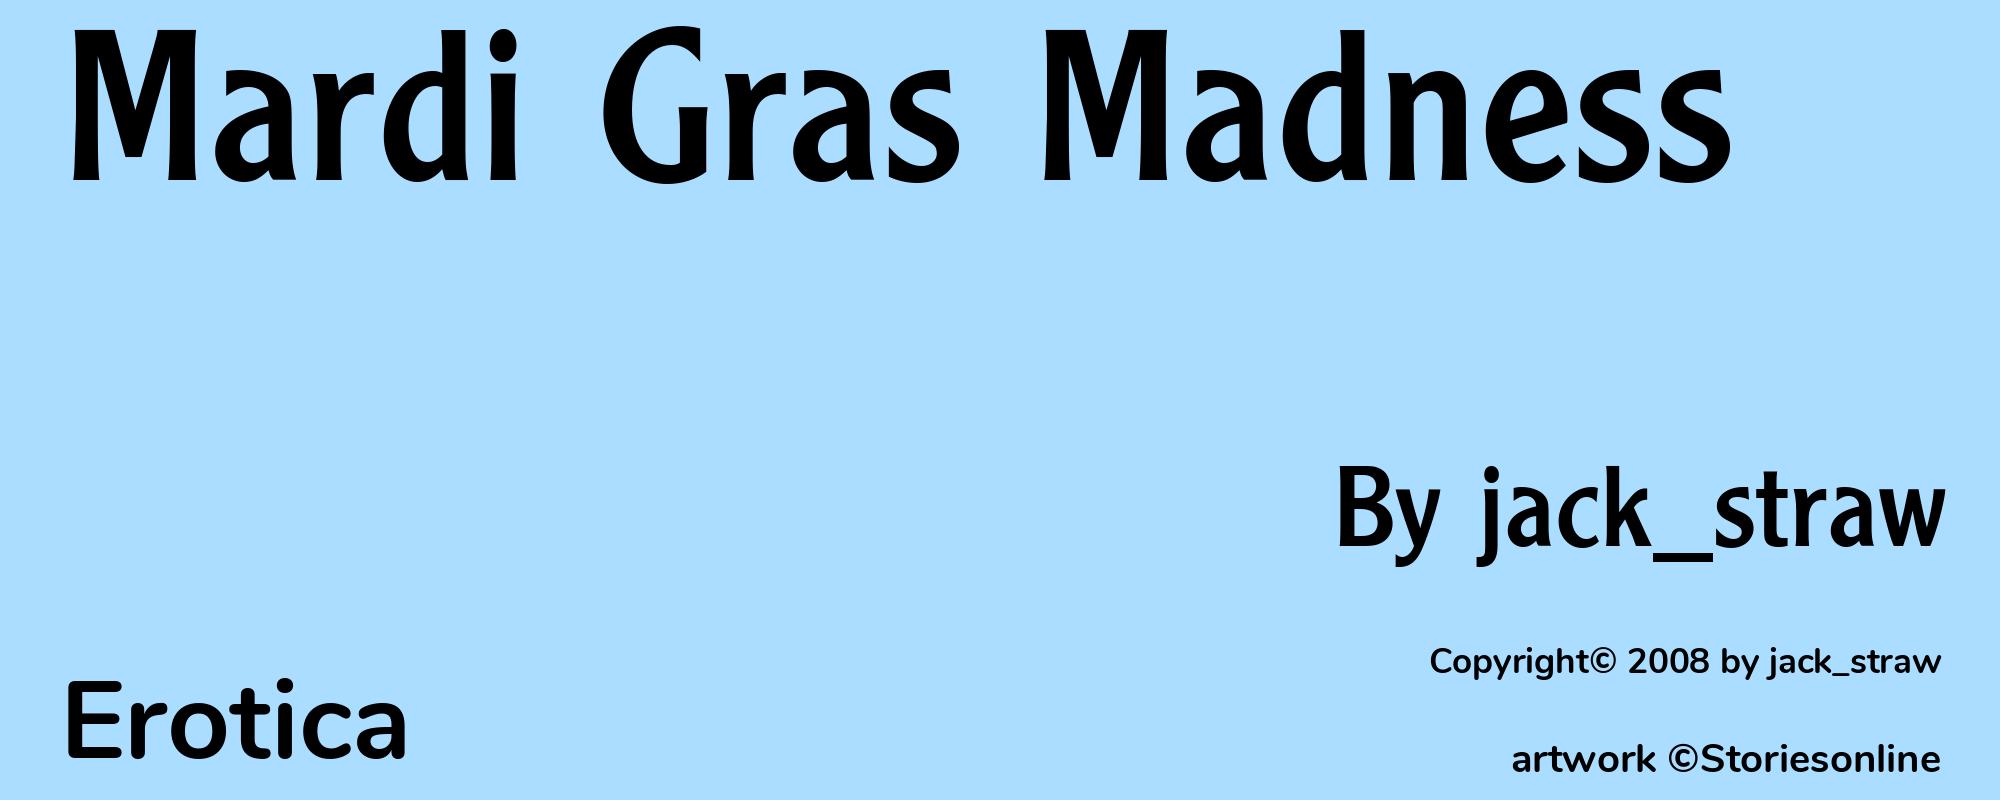 Mardi Gras Madness - Cover